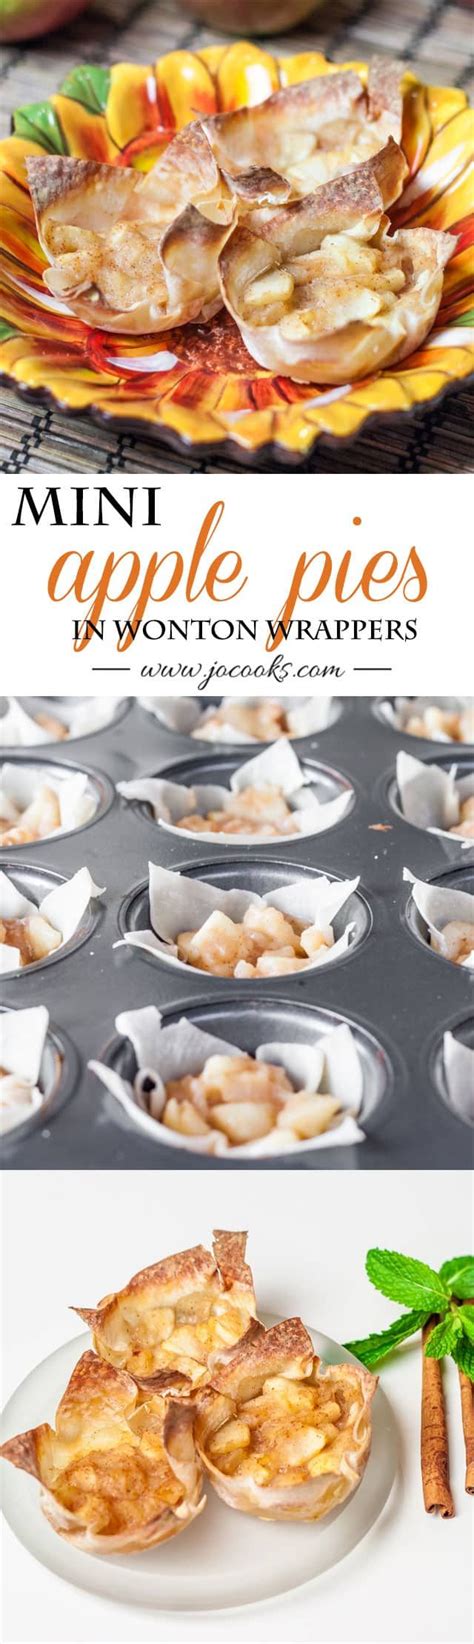 wonton wrappers coles